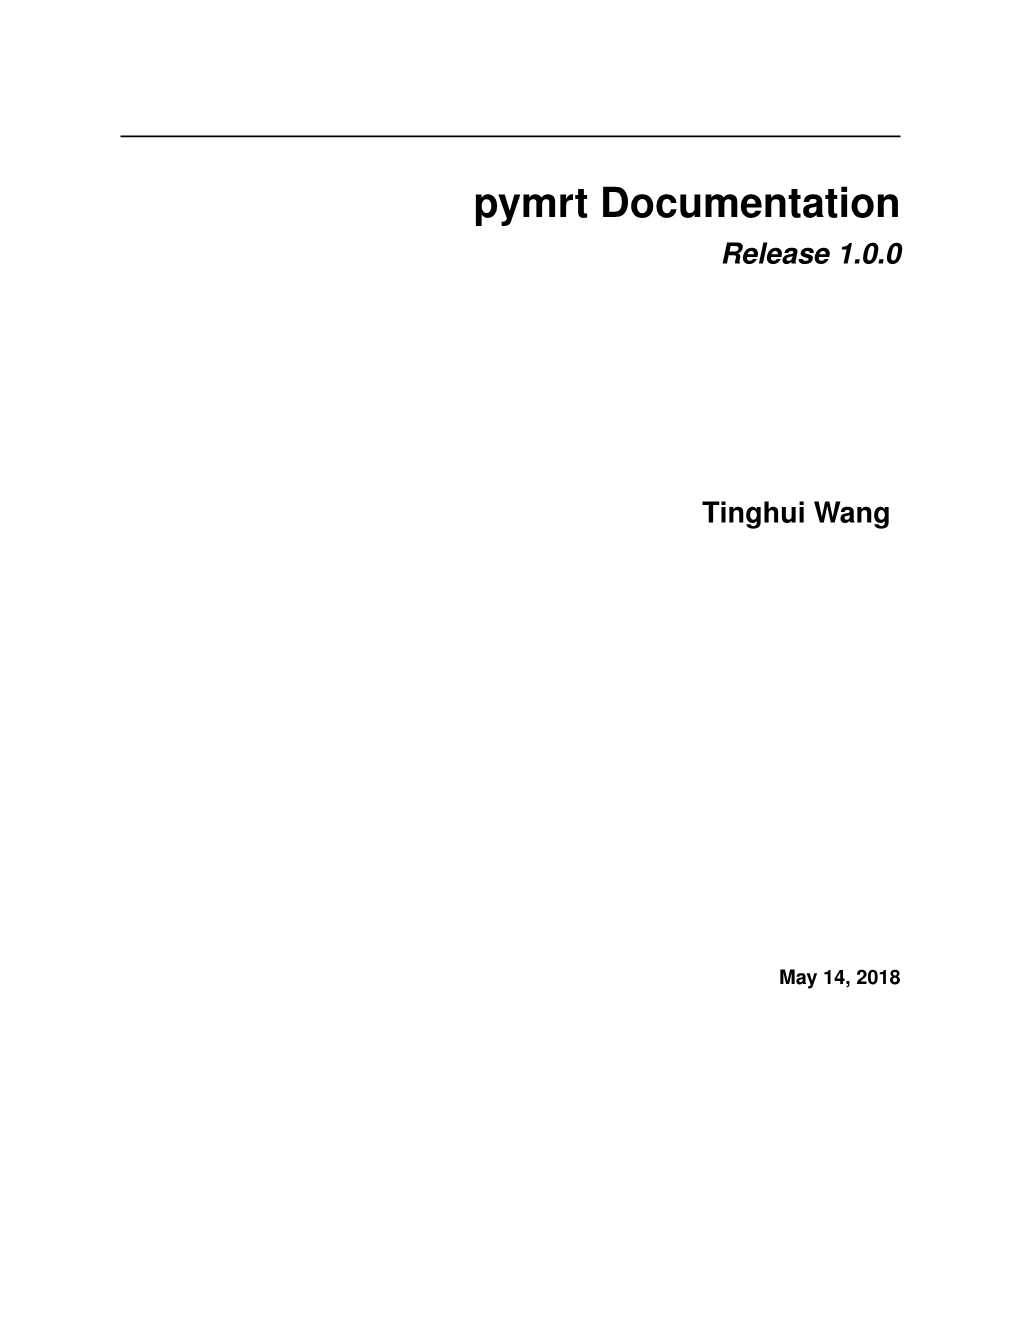 Pymrt Documentation Release 1.0.0